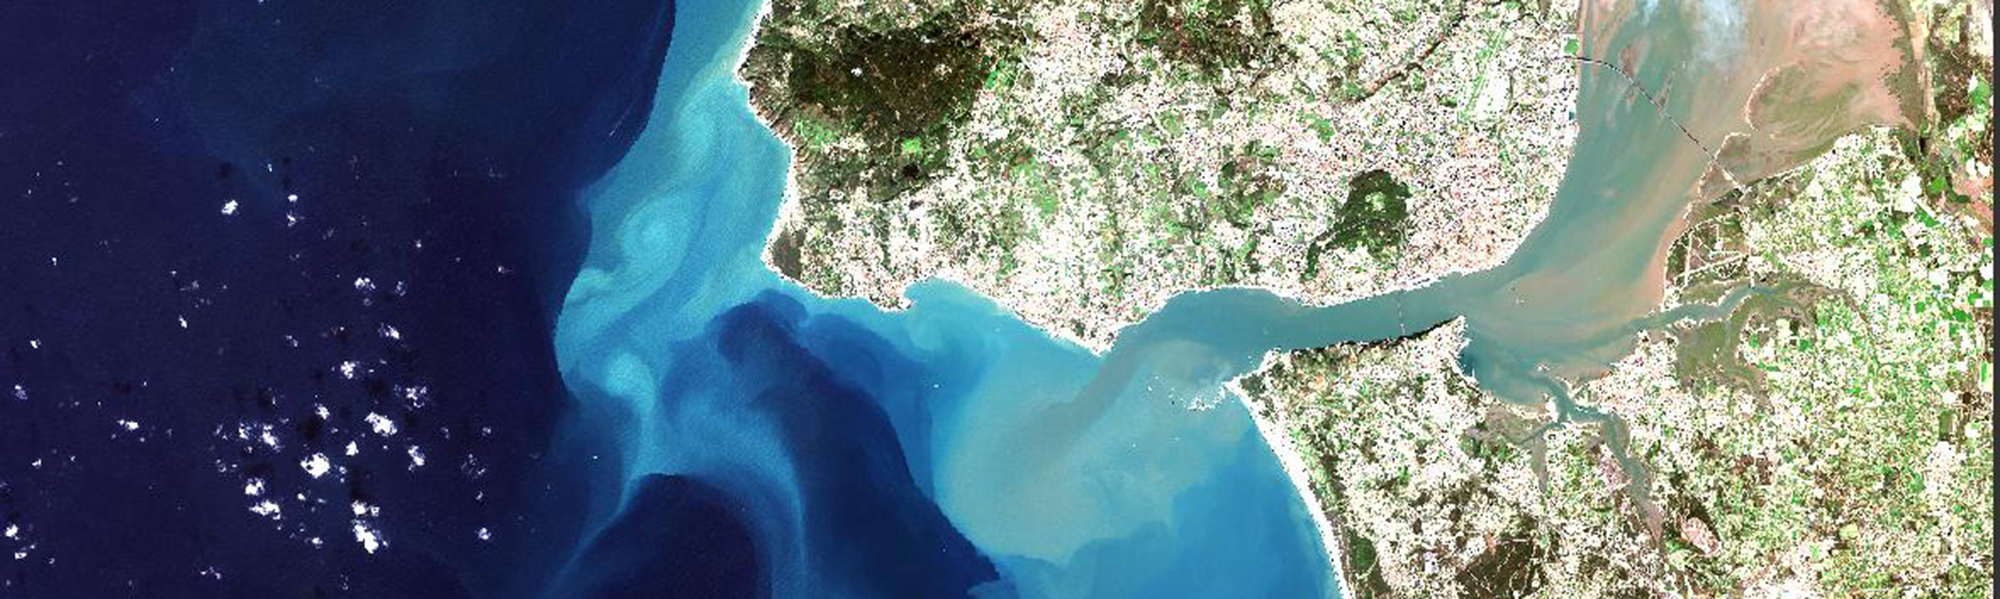 Satellite image of the Tagus estuary